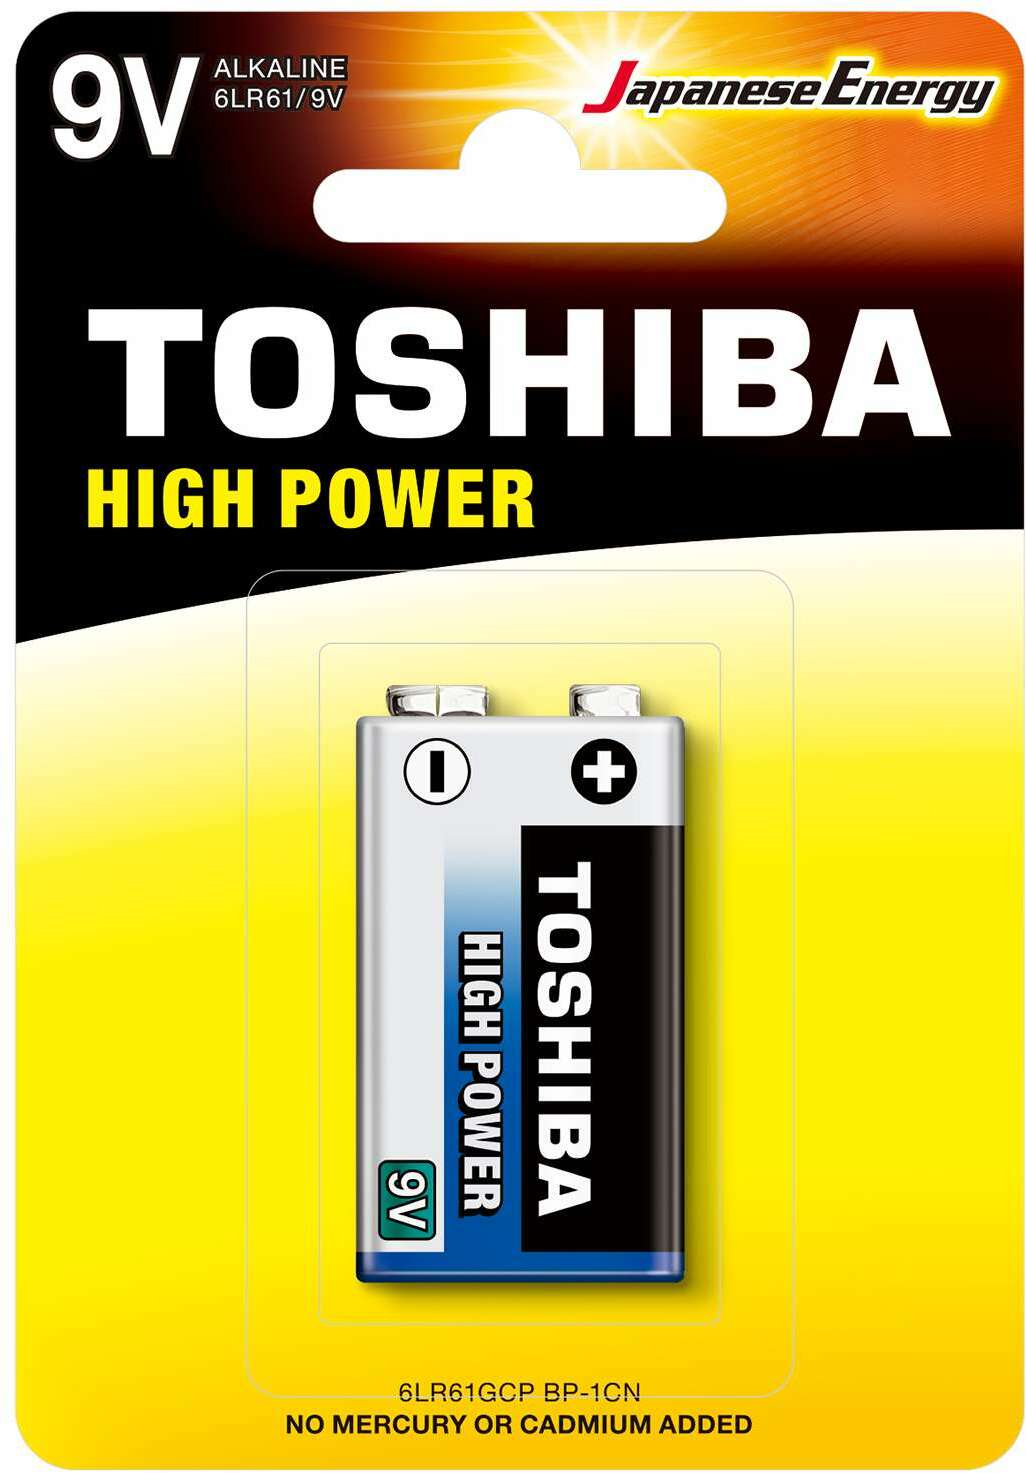 Toshiba 6lr61 - 9v - Battery - Main picture